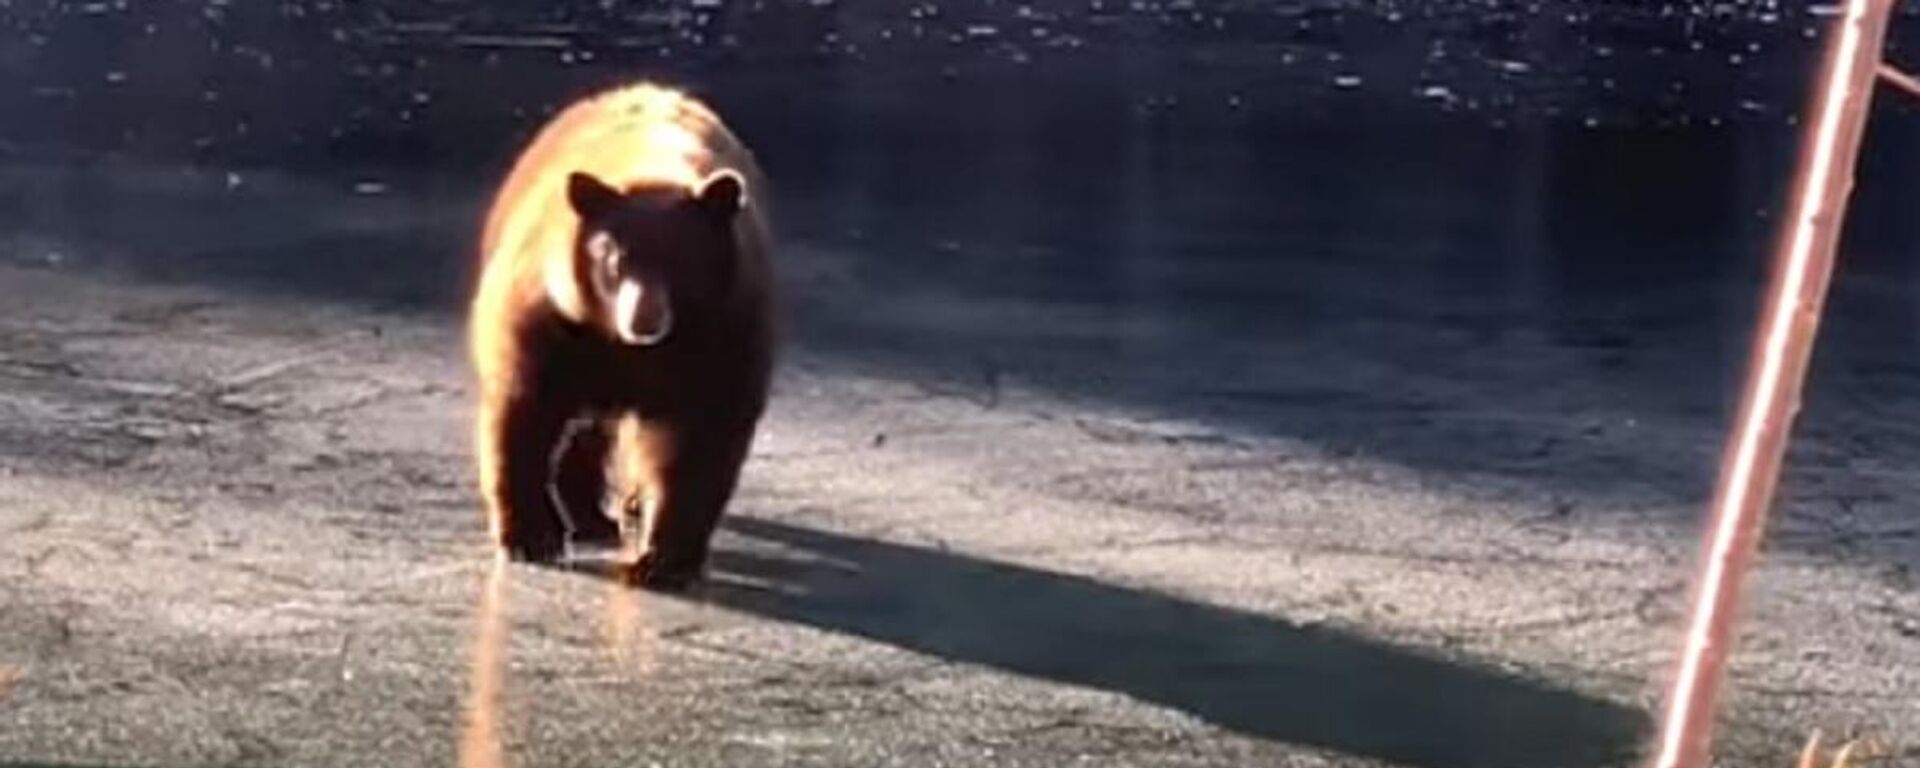 Un oso vive intensos momentos sobre el fino hielo - Sputnik Mundo, 1920, 17.02.2021